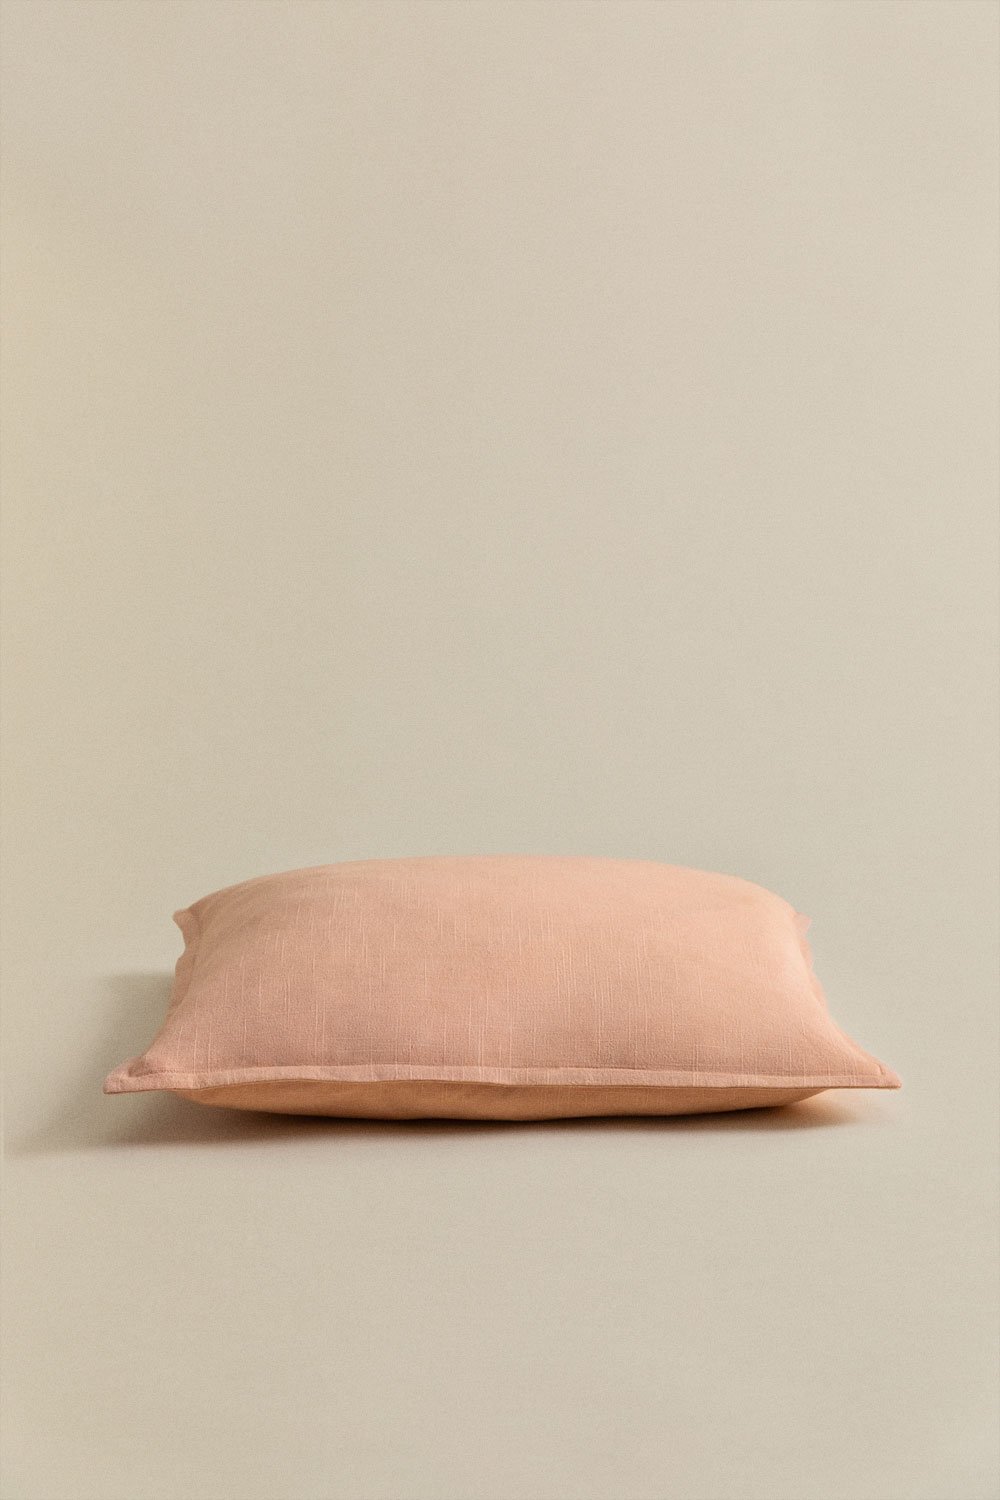 Square Cotton Cushion (45x45 cm) Elezar, gallery image 2